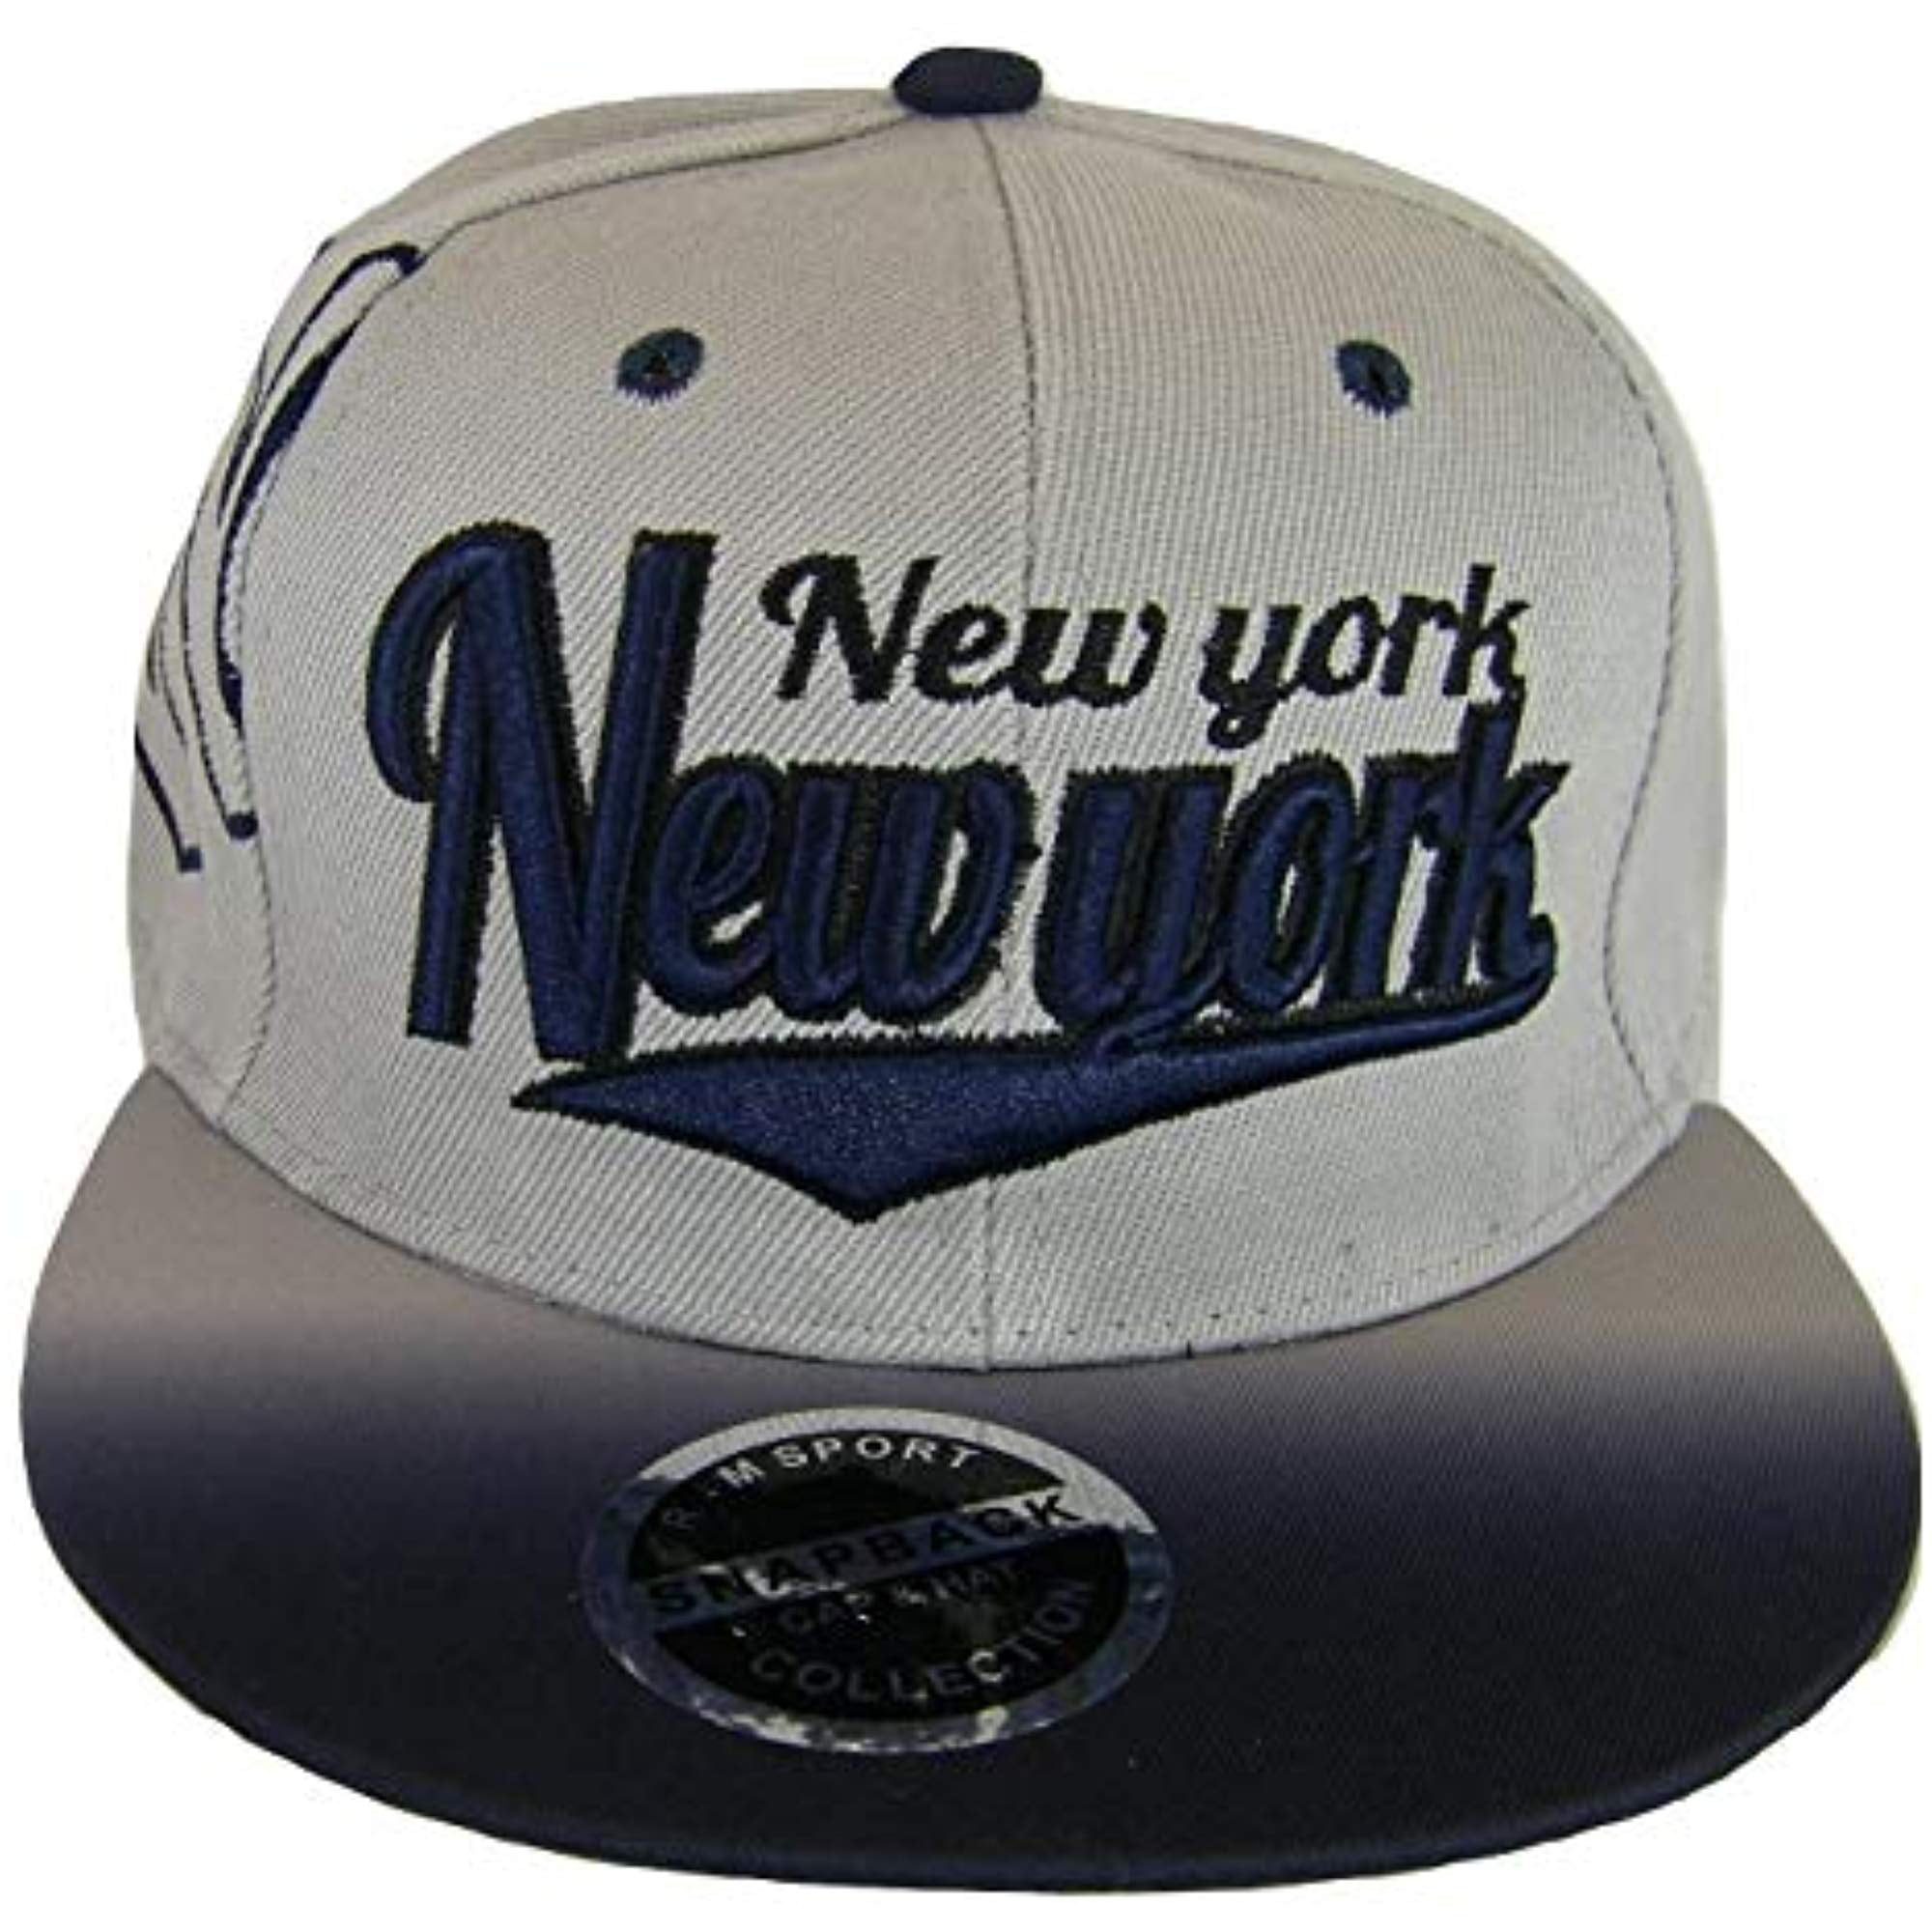 N DIMES "BROOKLYN" New York City NYC Urban Street Apparel Snapback Hat NICKS 